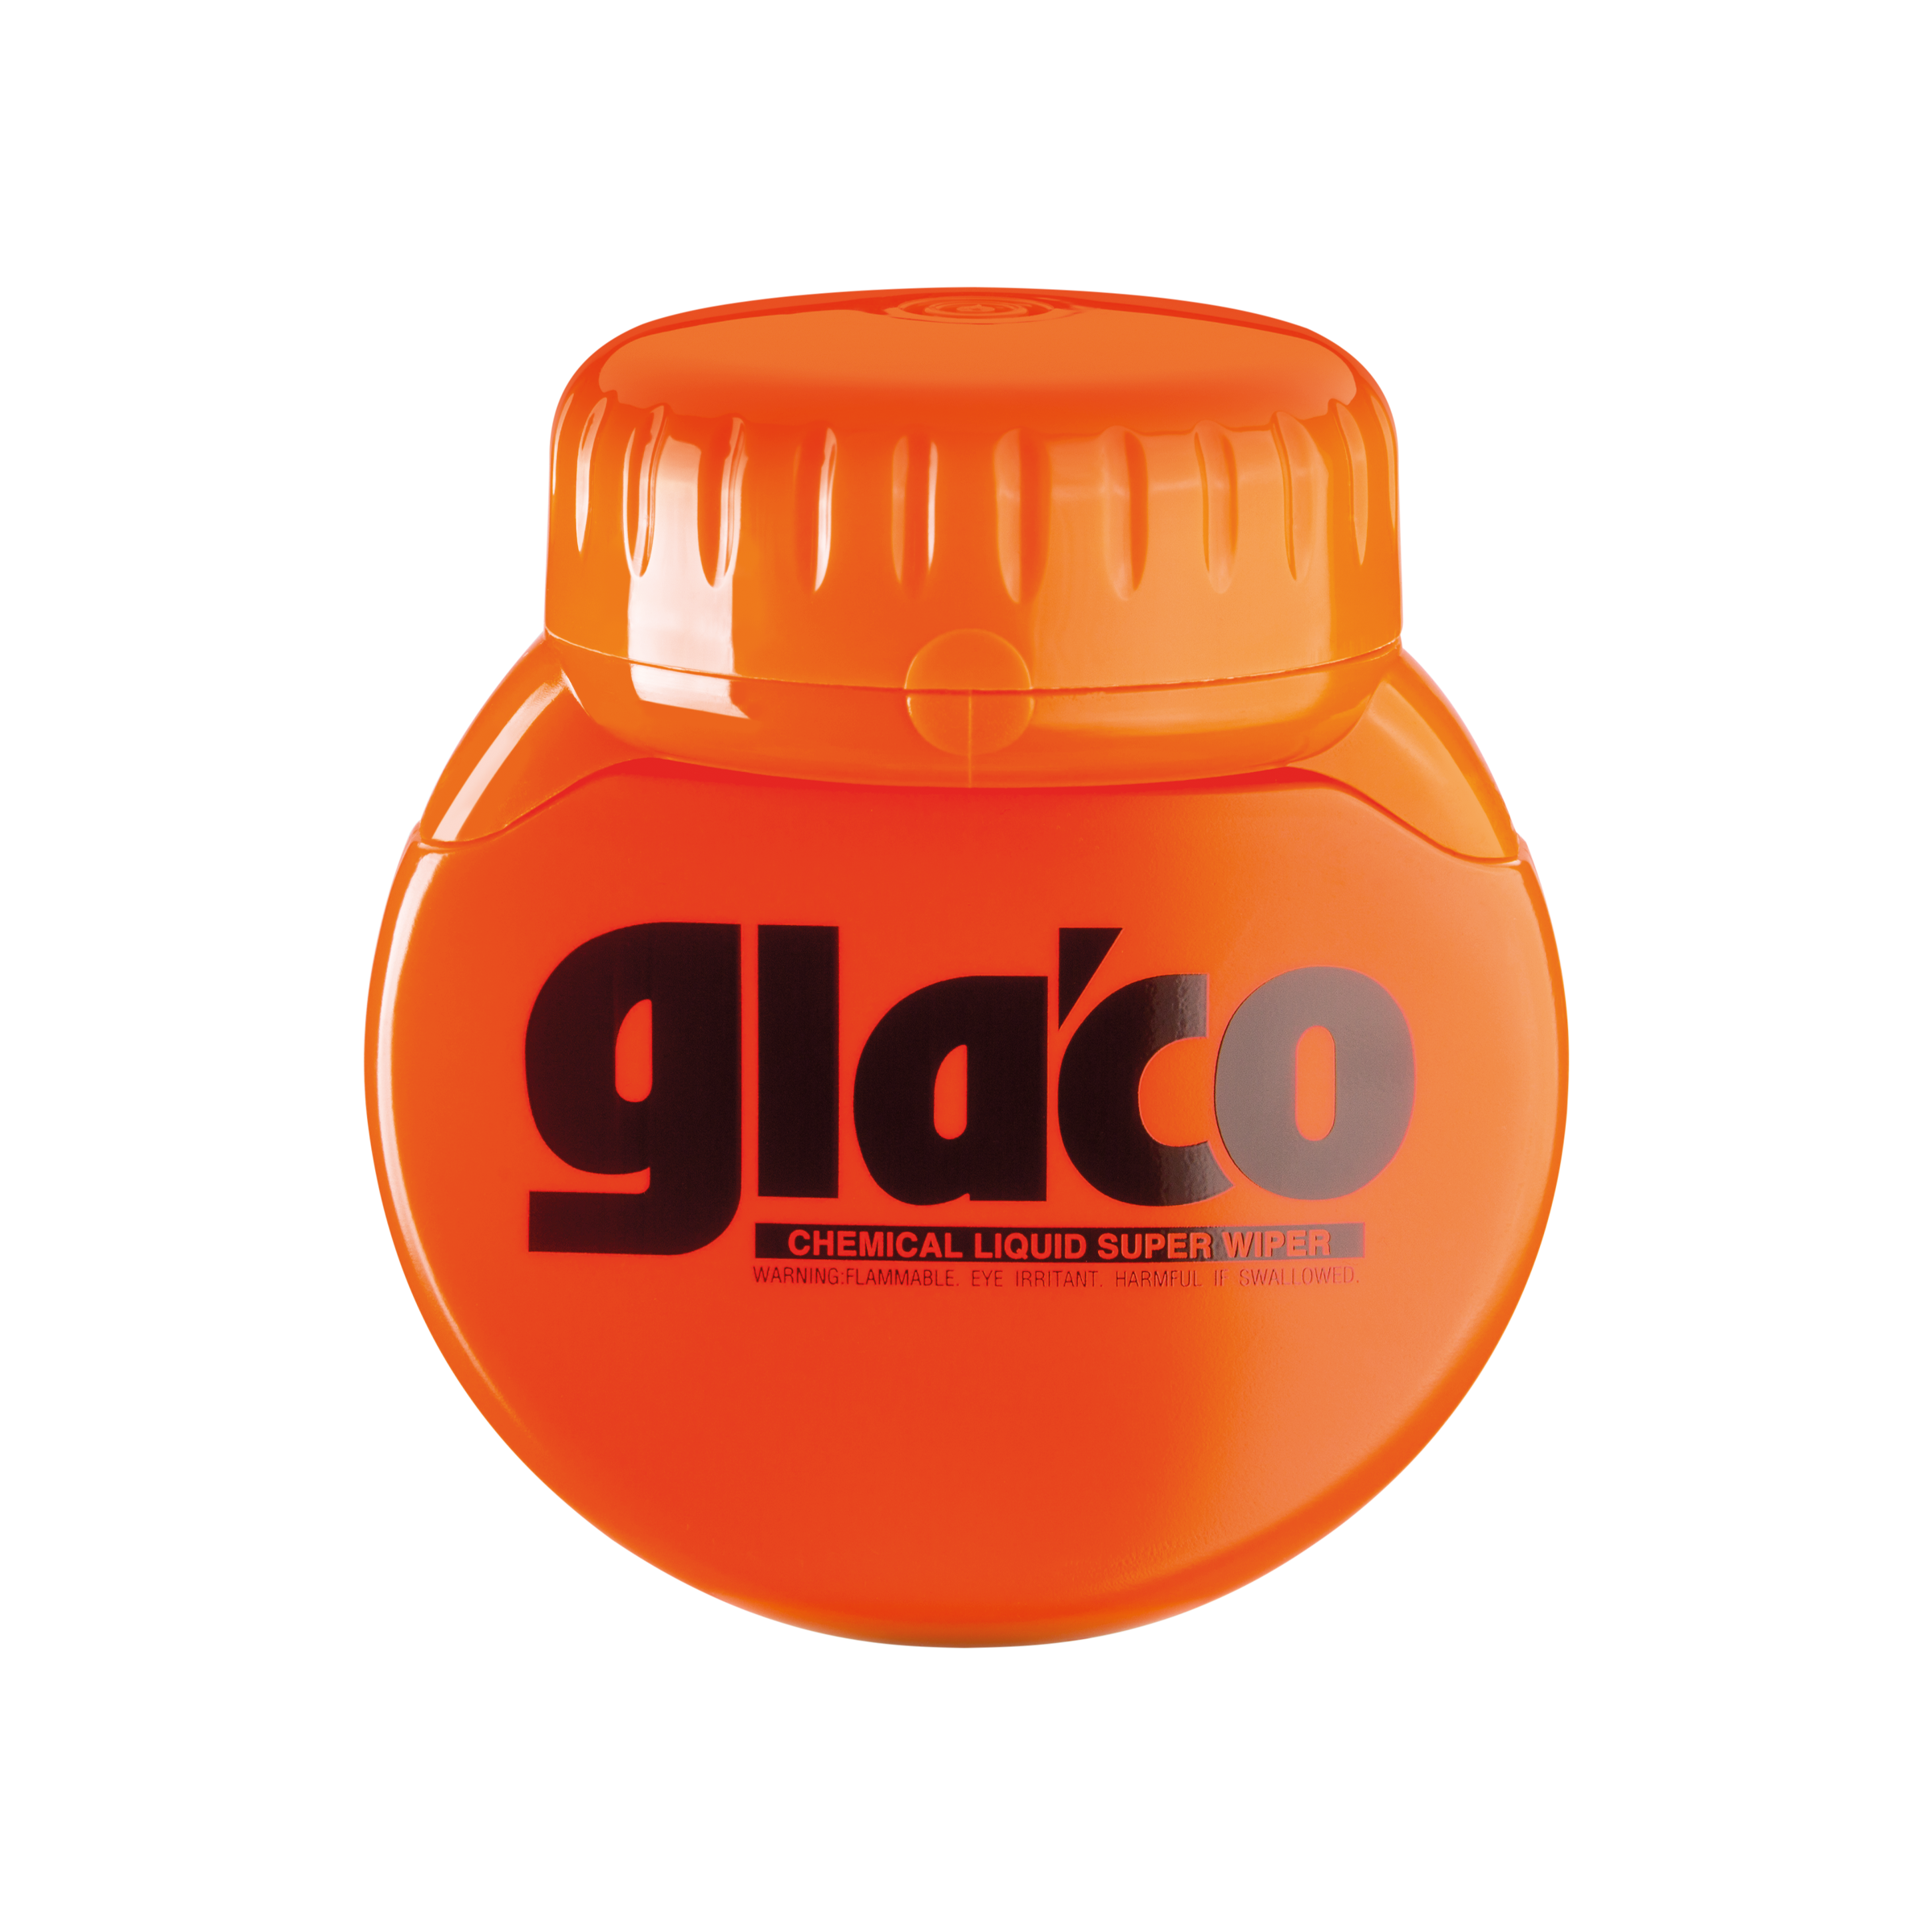 Glaco Mirror Coat Zero, Glass & Mirrors Water repellents